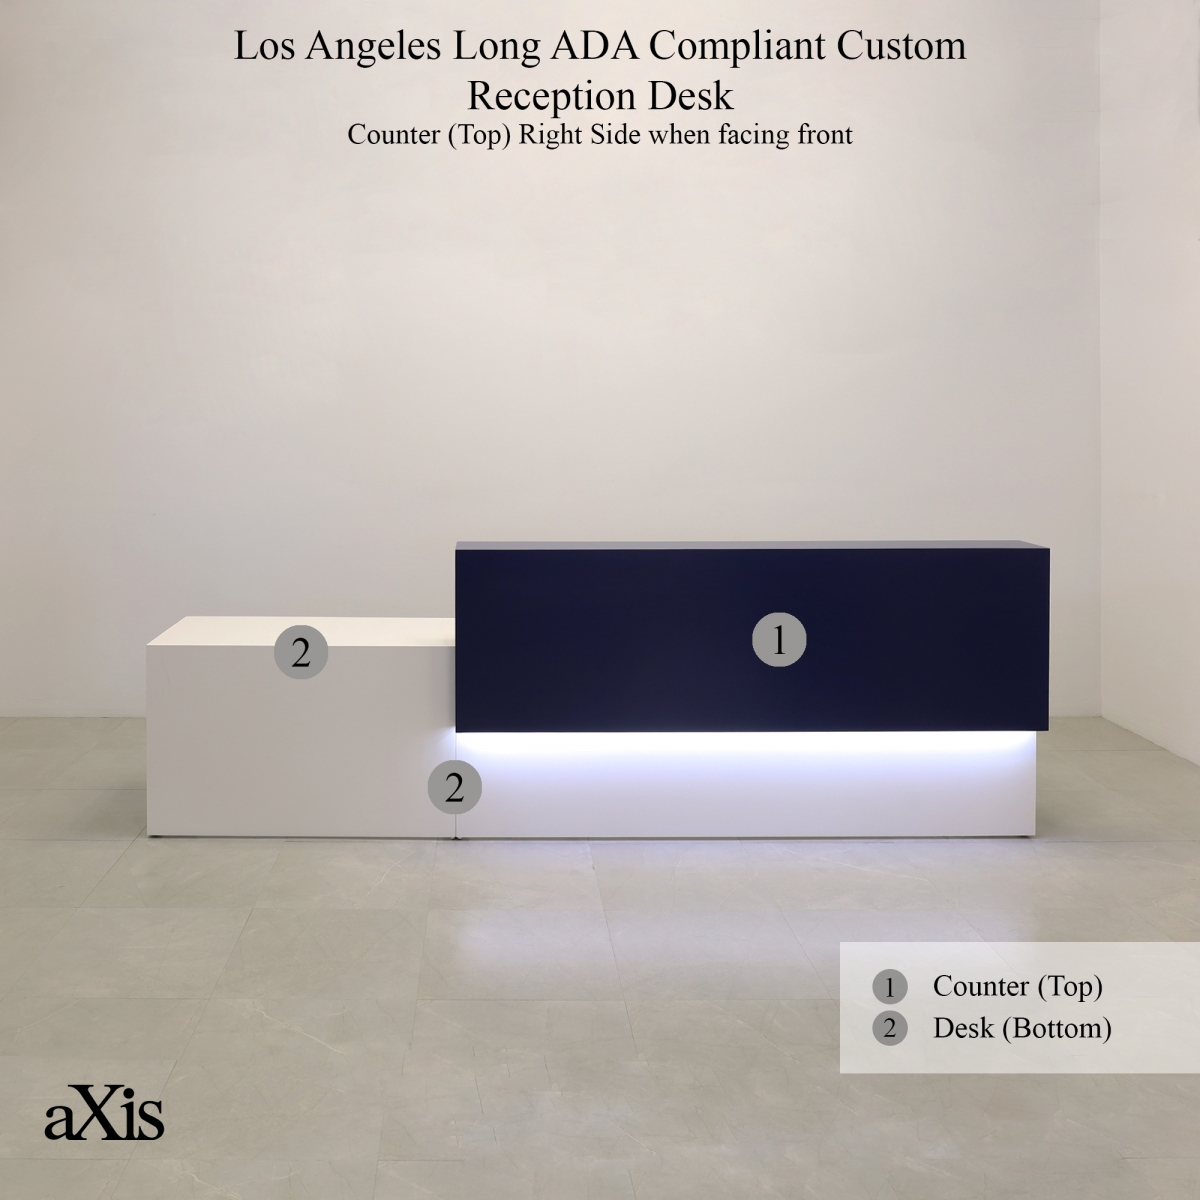 Los Angeles Long and ADA Compliant Custom Reception Desk